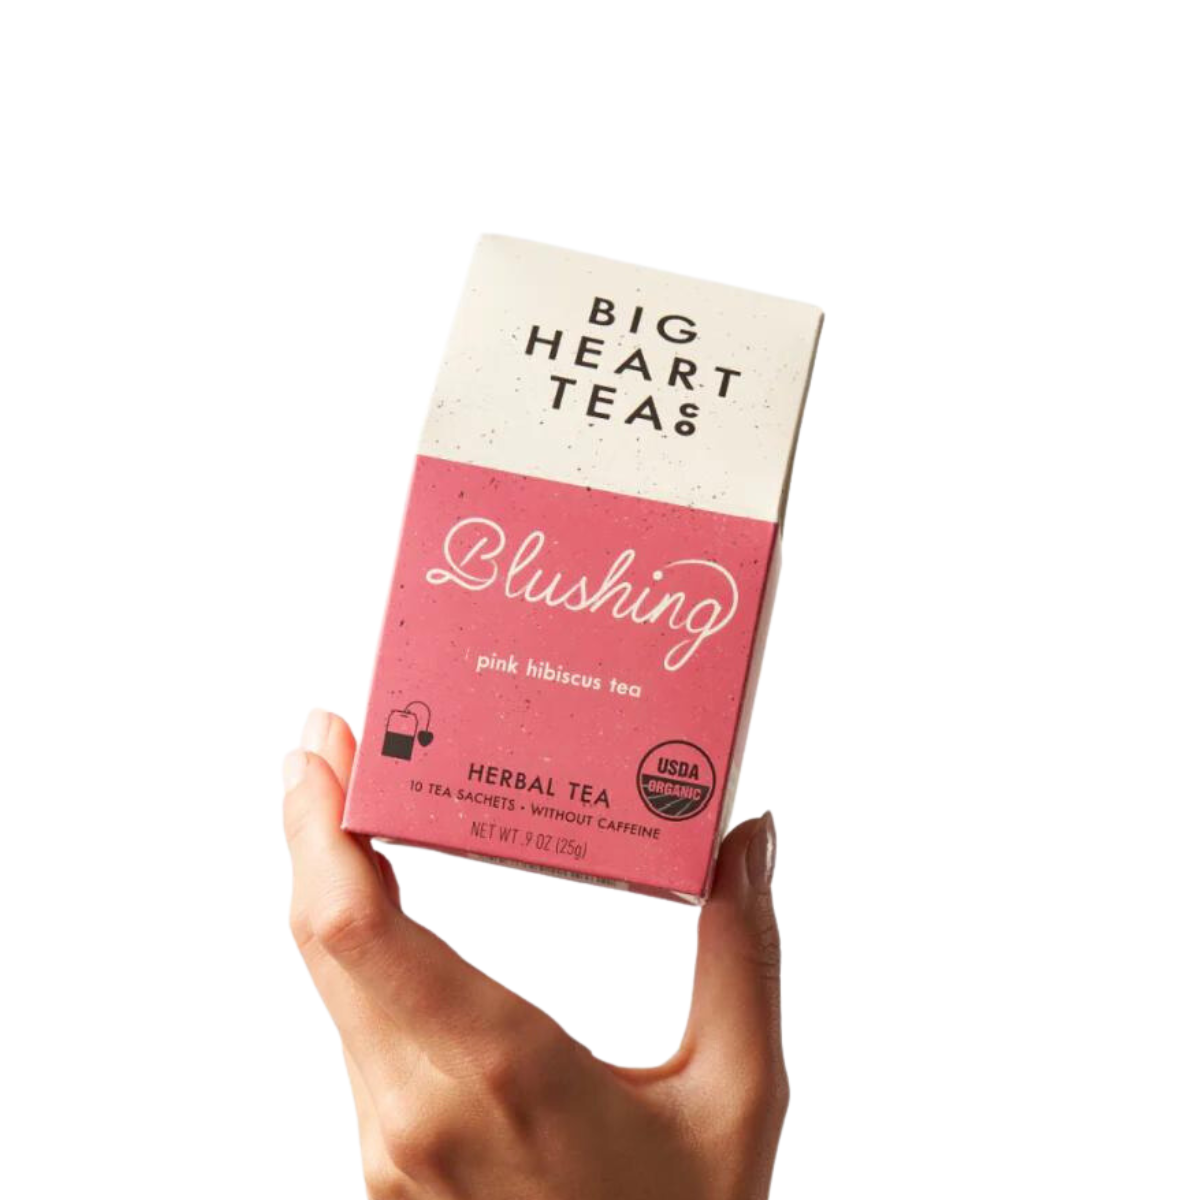 Blushing - Big Heart Tea Co.